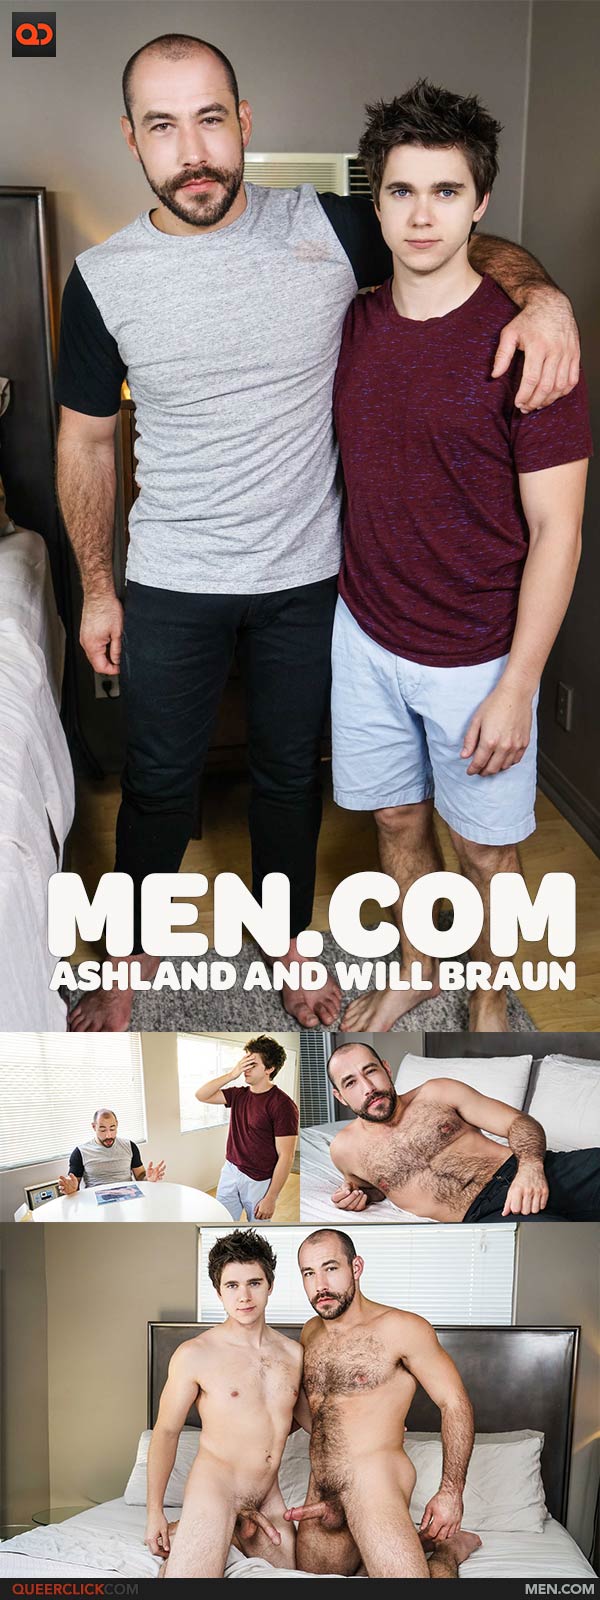 Men.com:  Ashland and Will Braun